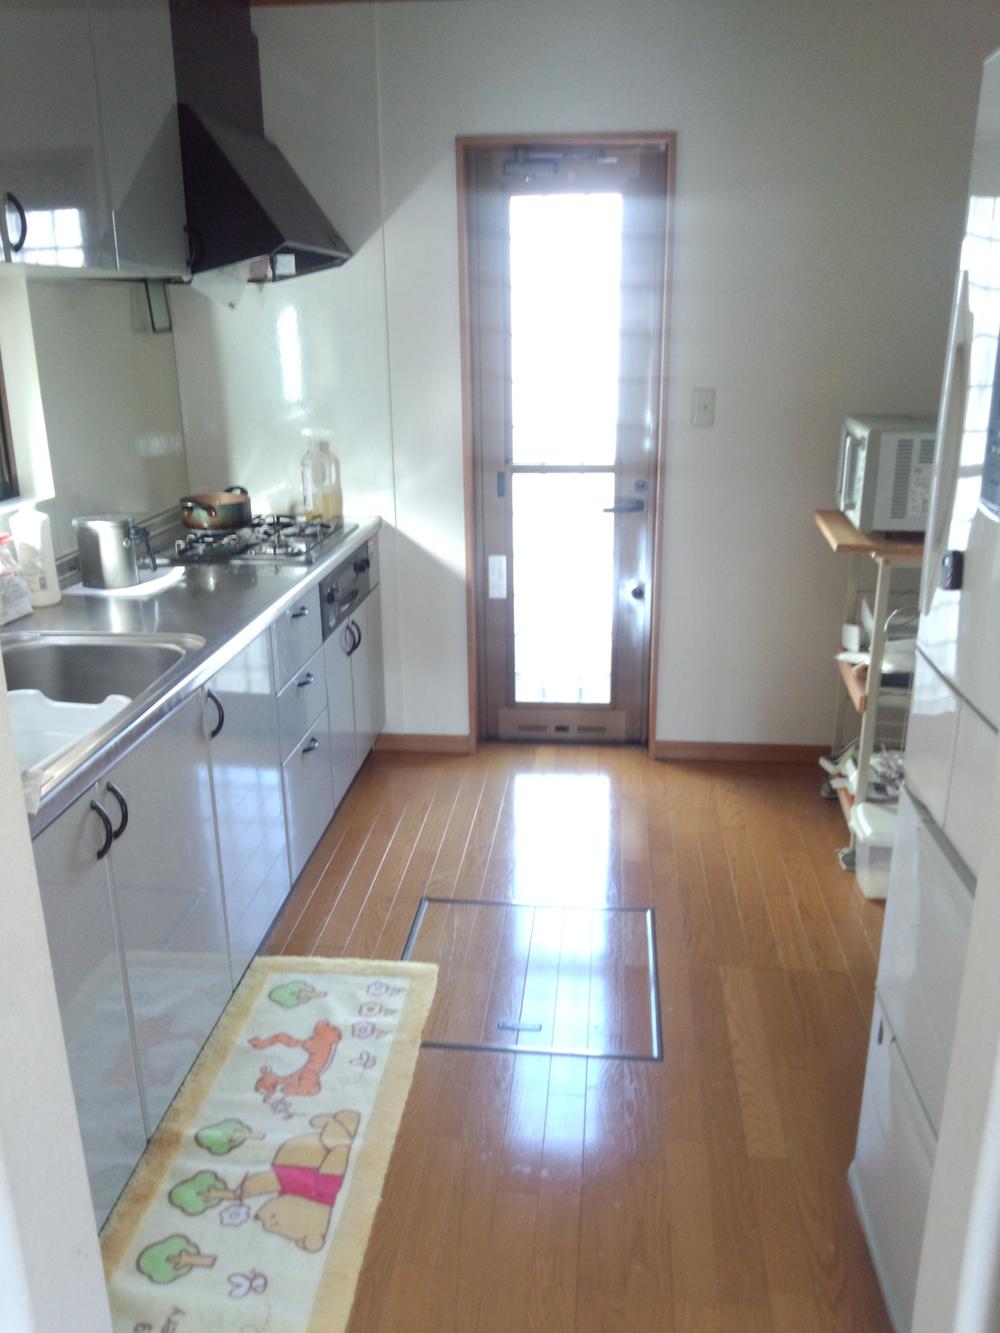 Kitchen. Indoor (January 2014) Shooting